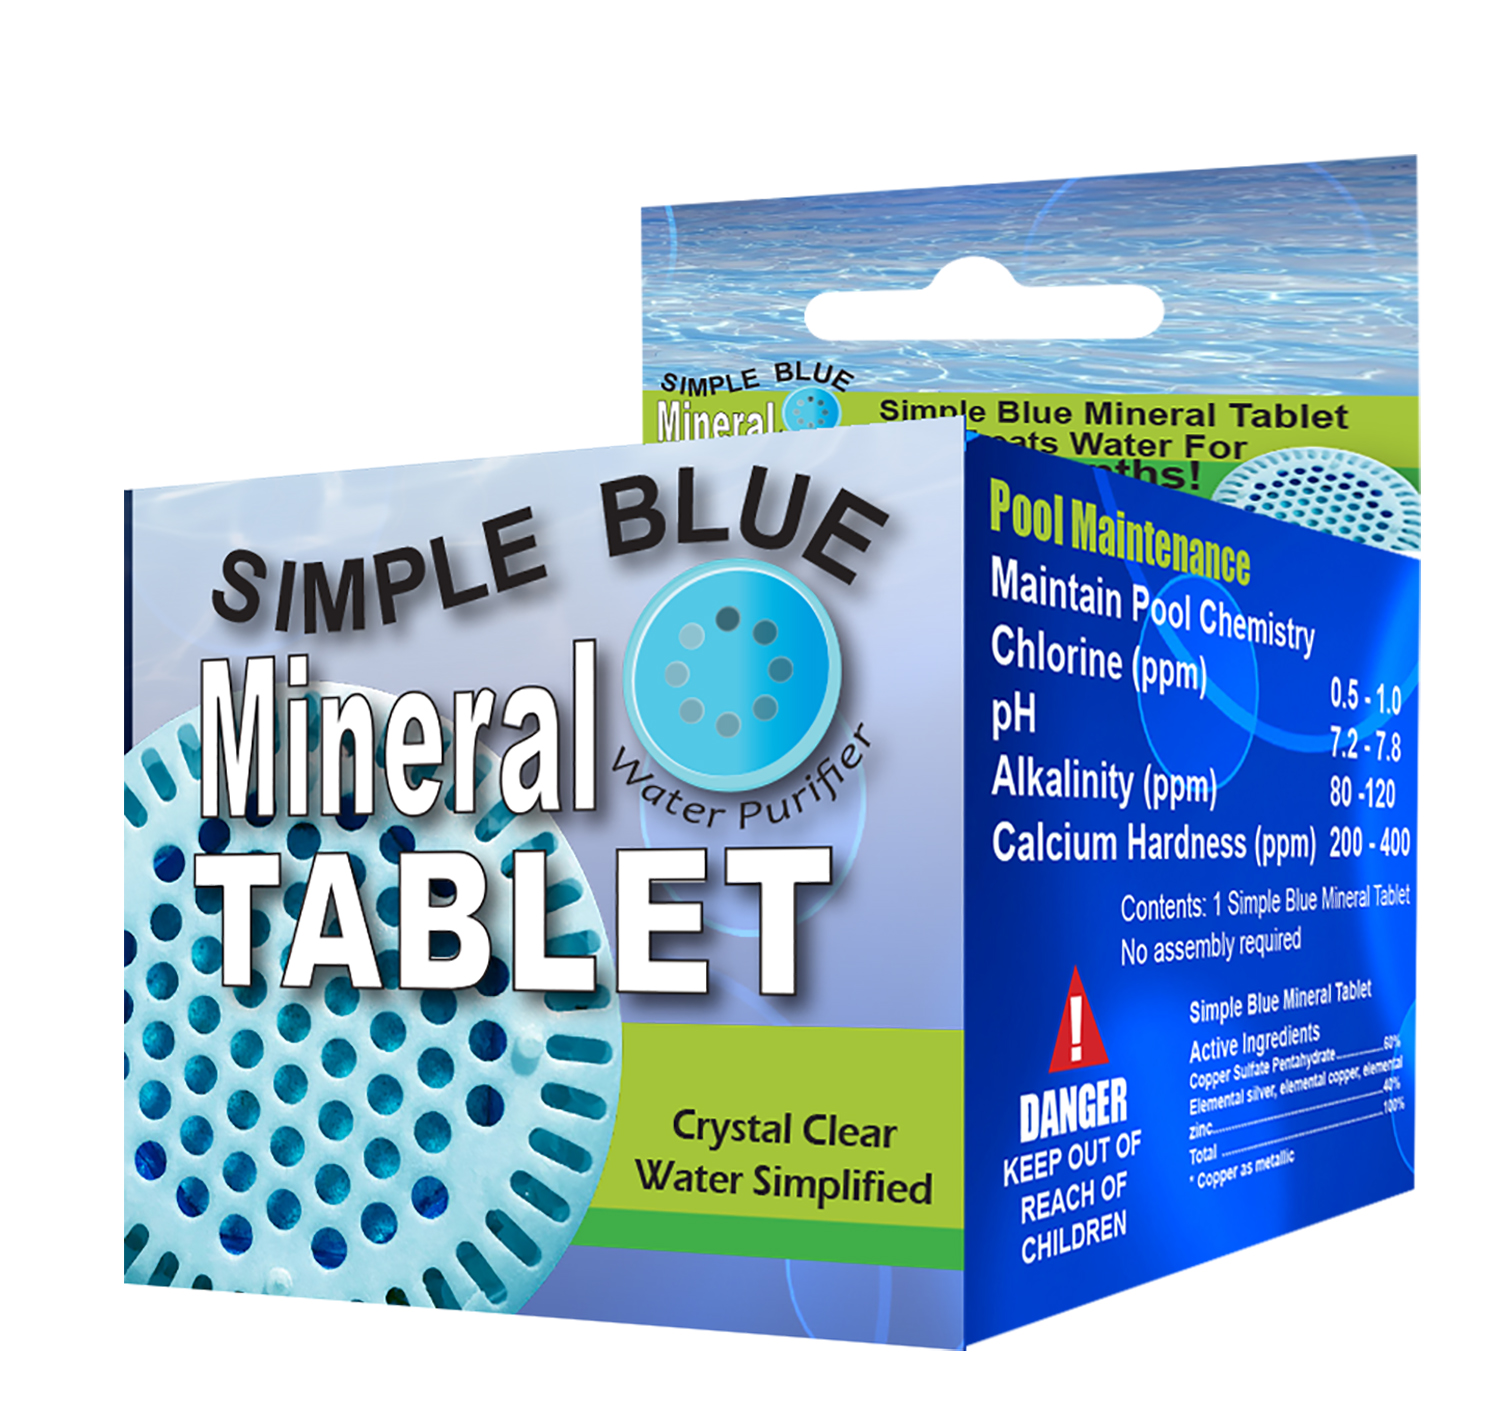 SIMPLE BLUE MINERAL TABLET 15K